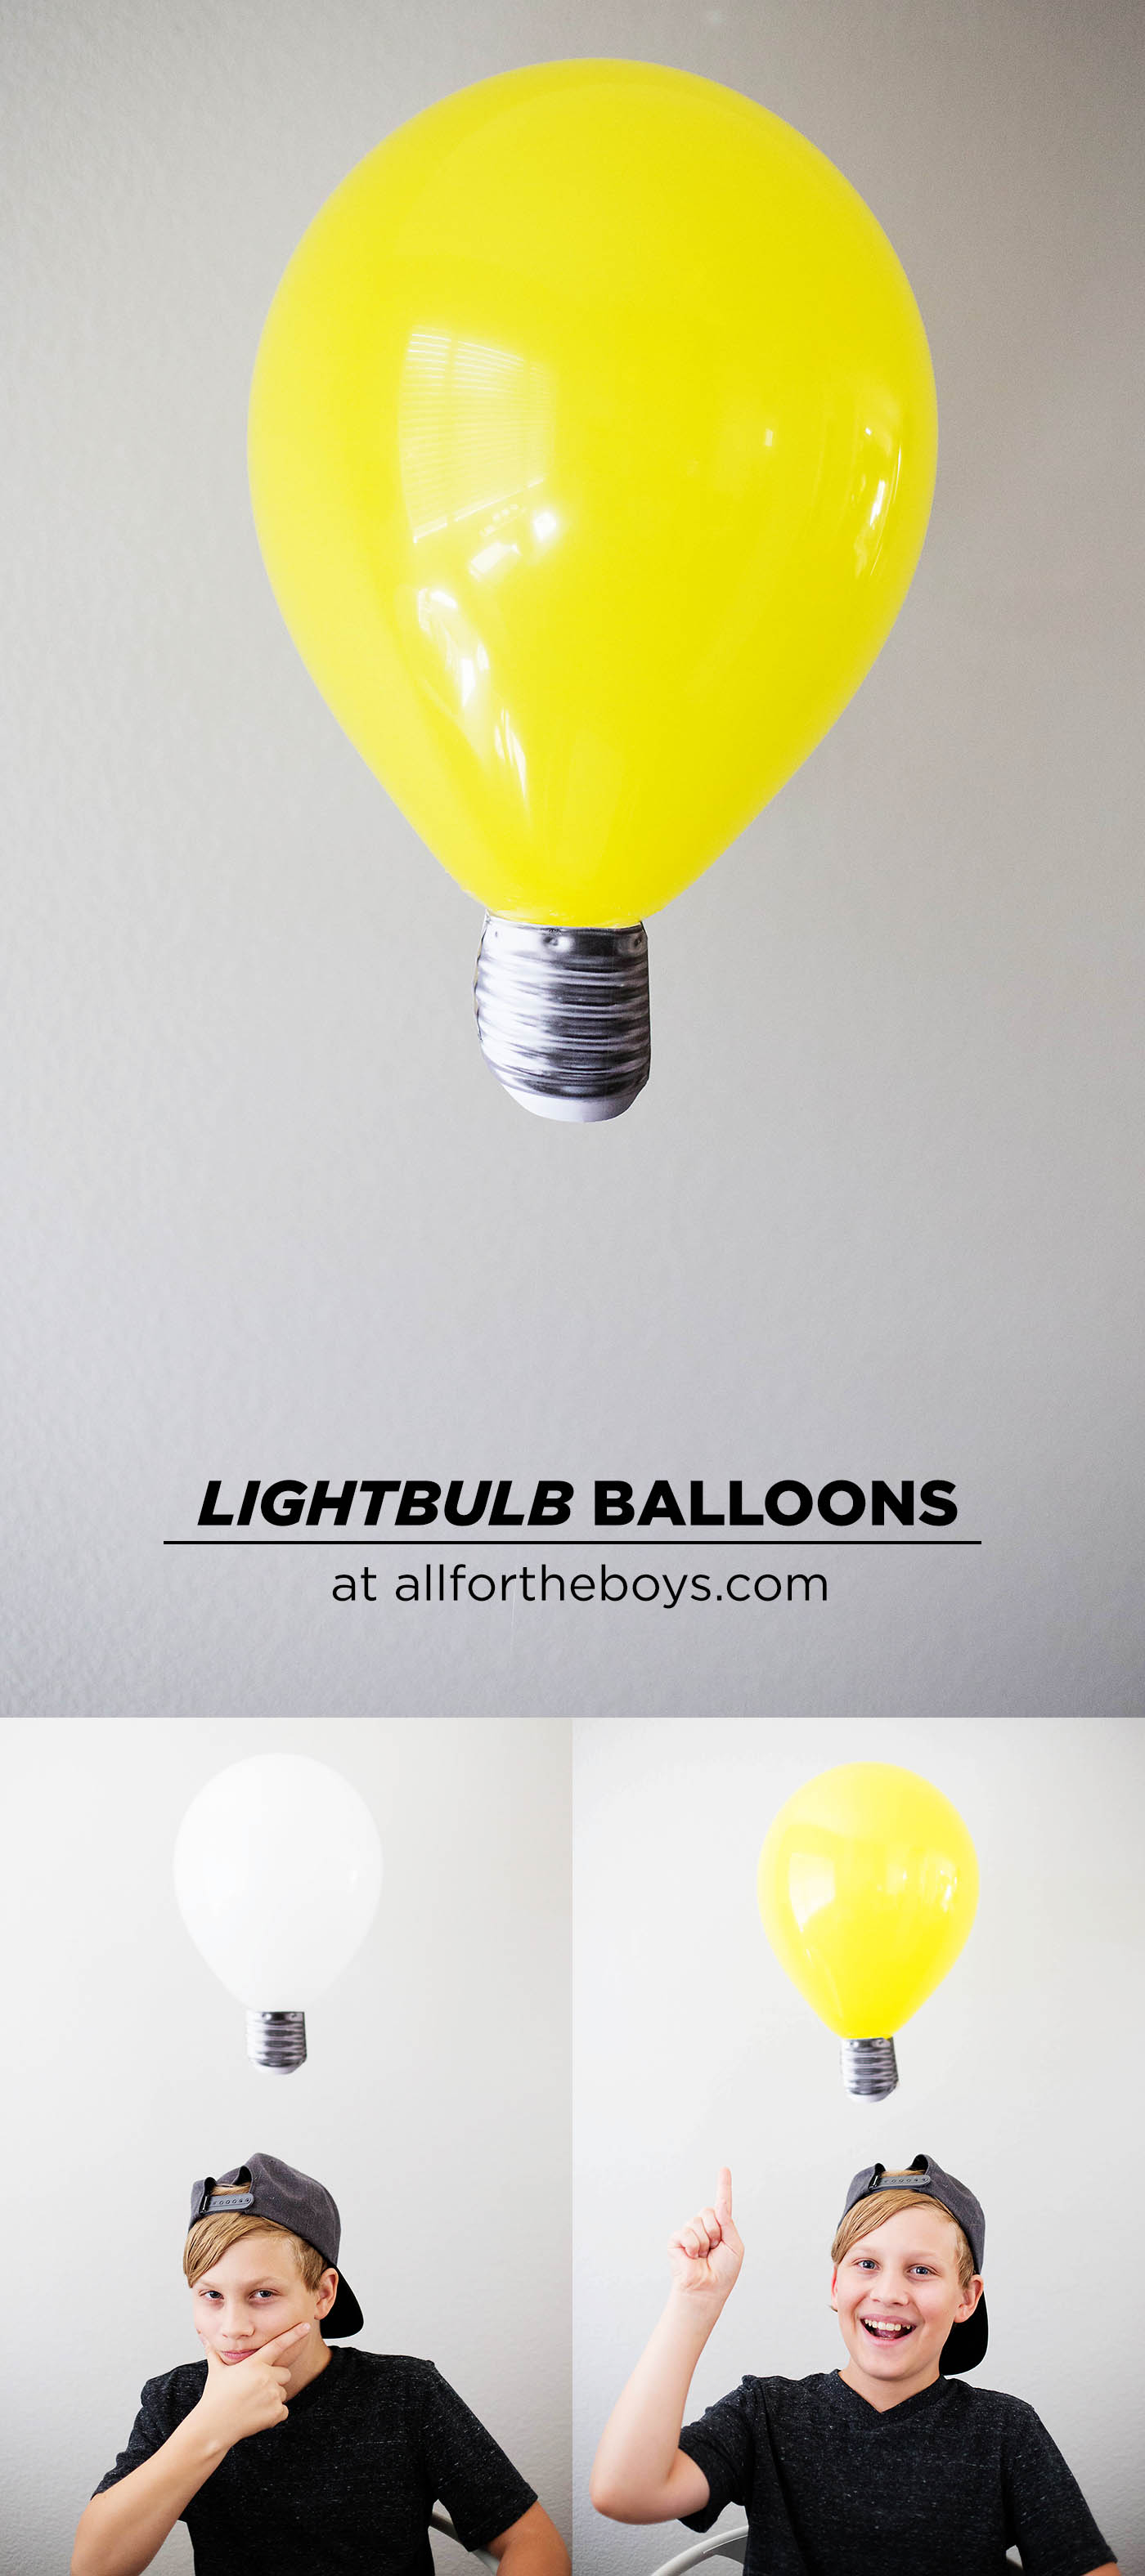 aftb-lightbulb-balloon-title